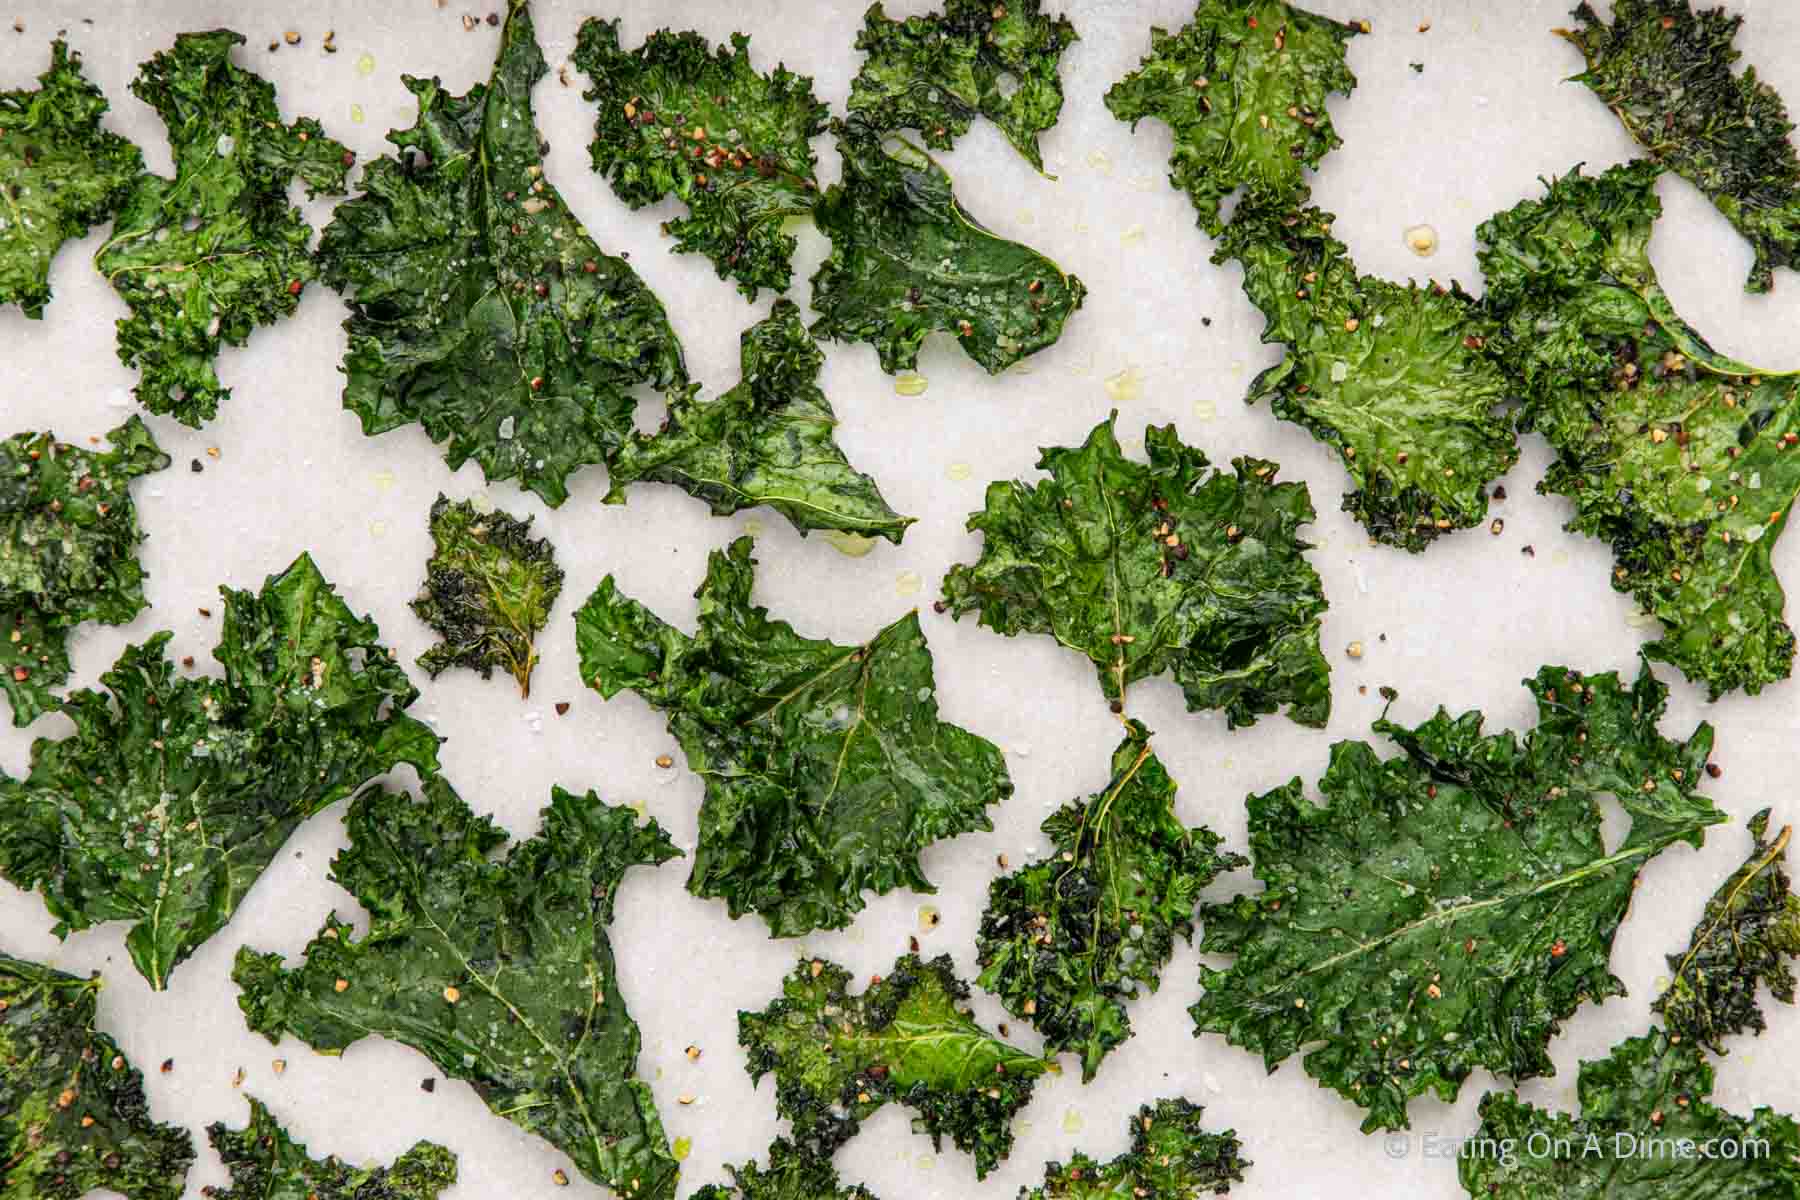 Kale Chips on a baking sheet